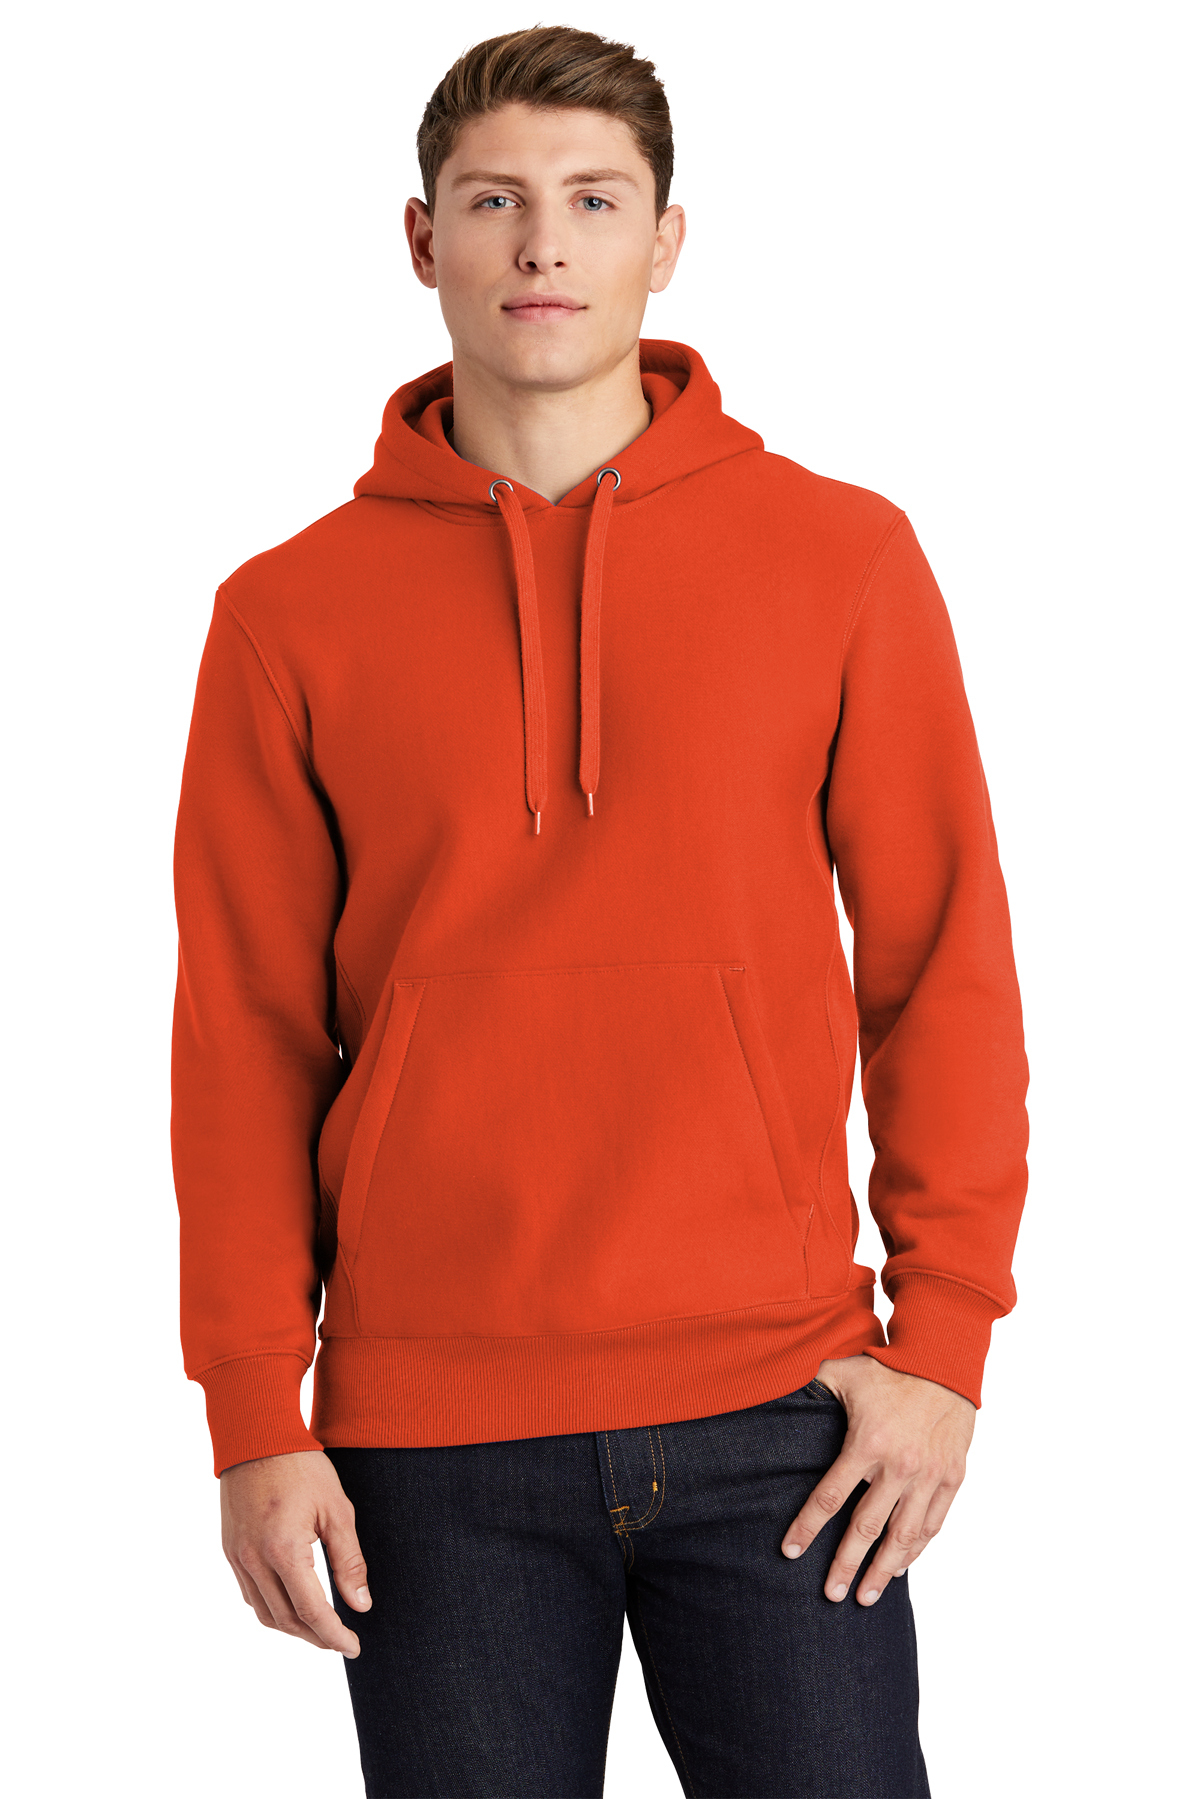 Gildan Men's Rib Knit Pouch Pocket Hooded Sweatshirt, Red, Large